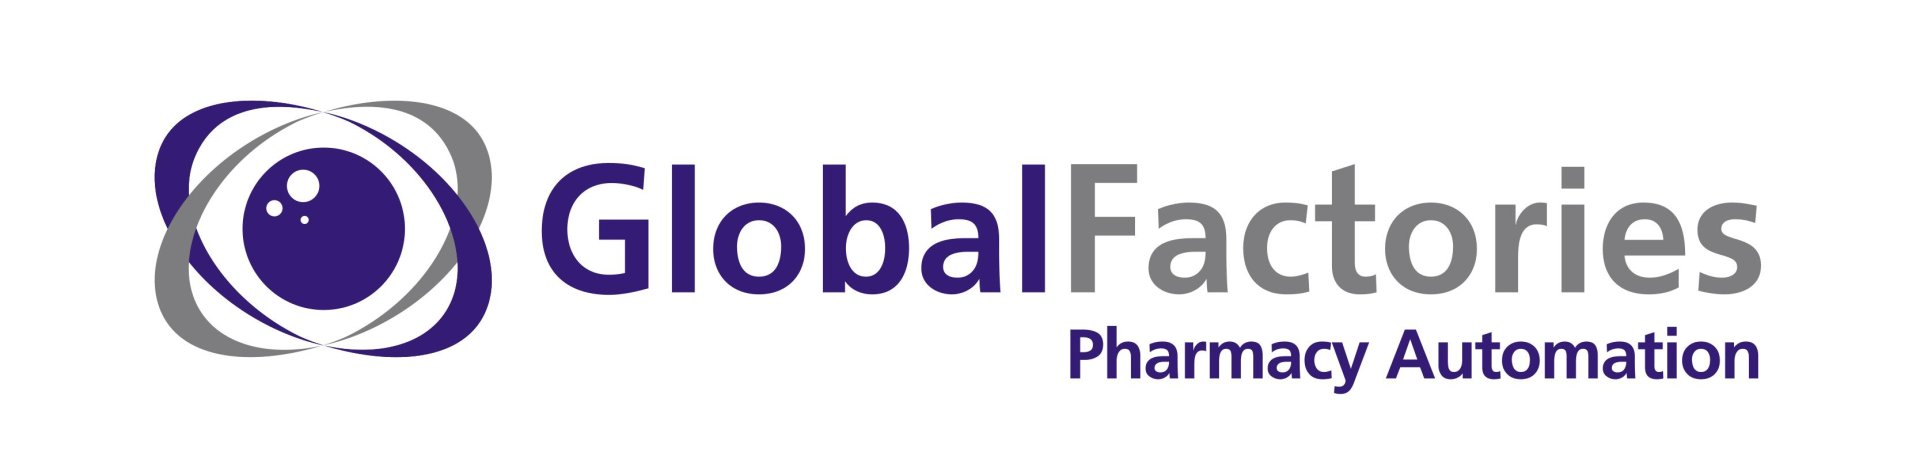 Logo Global Factories